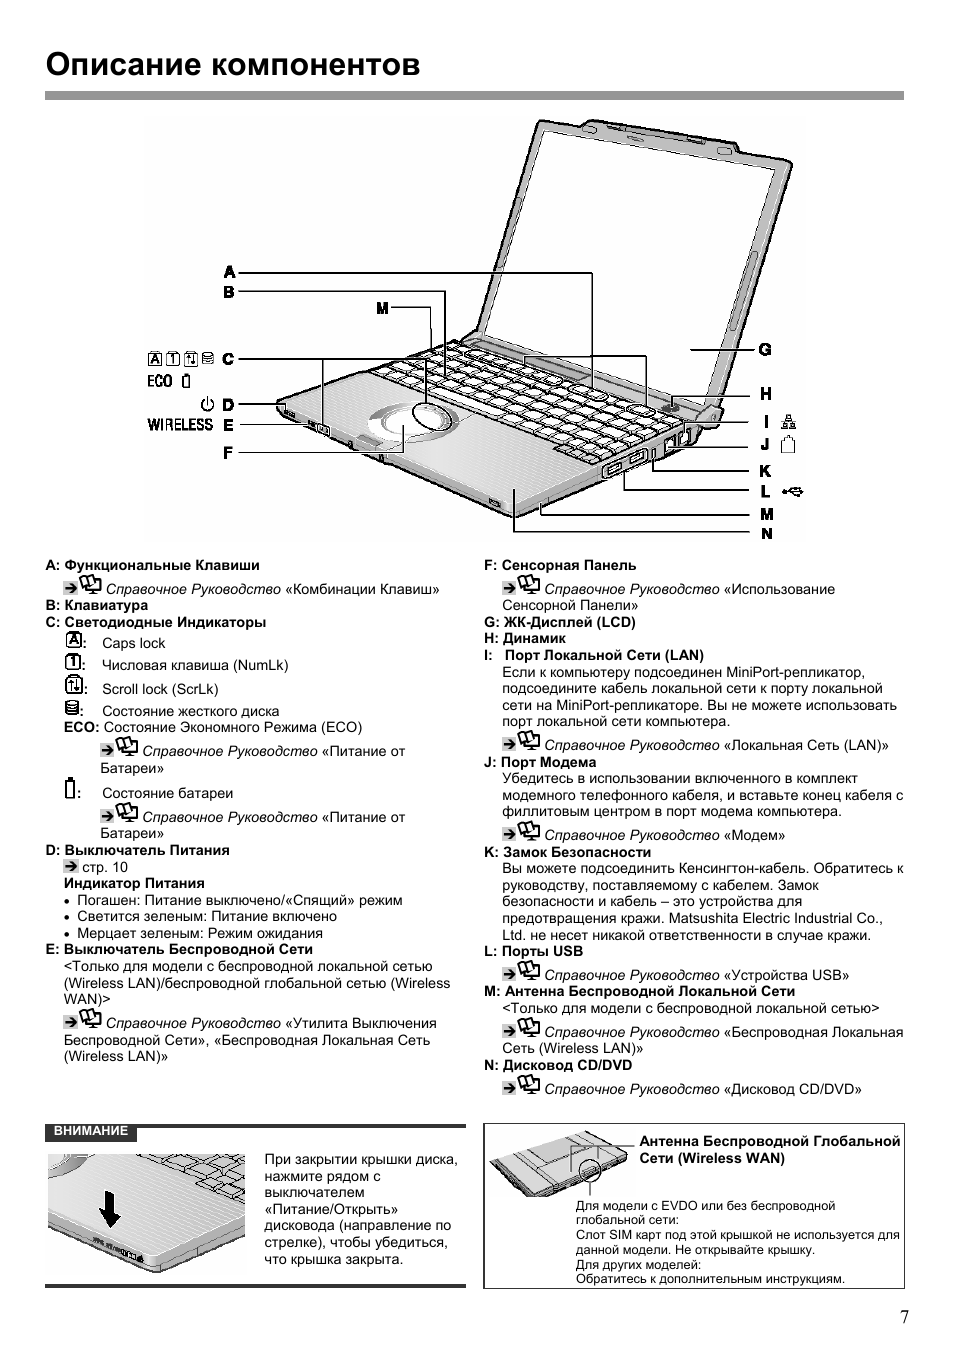 Описание компонентов | Инструкция по эксплуатации Panasonic CF-W5 | Страница 7 / 35